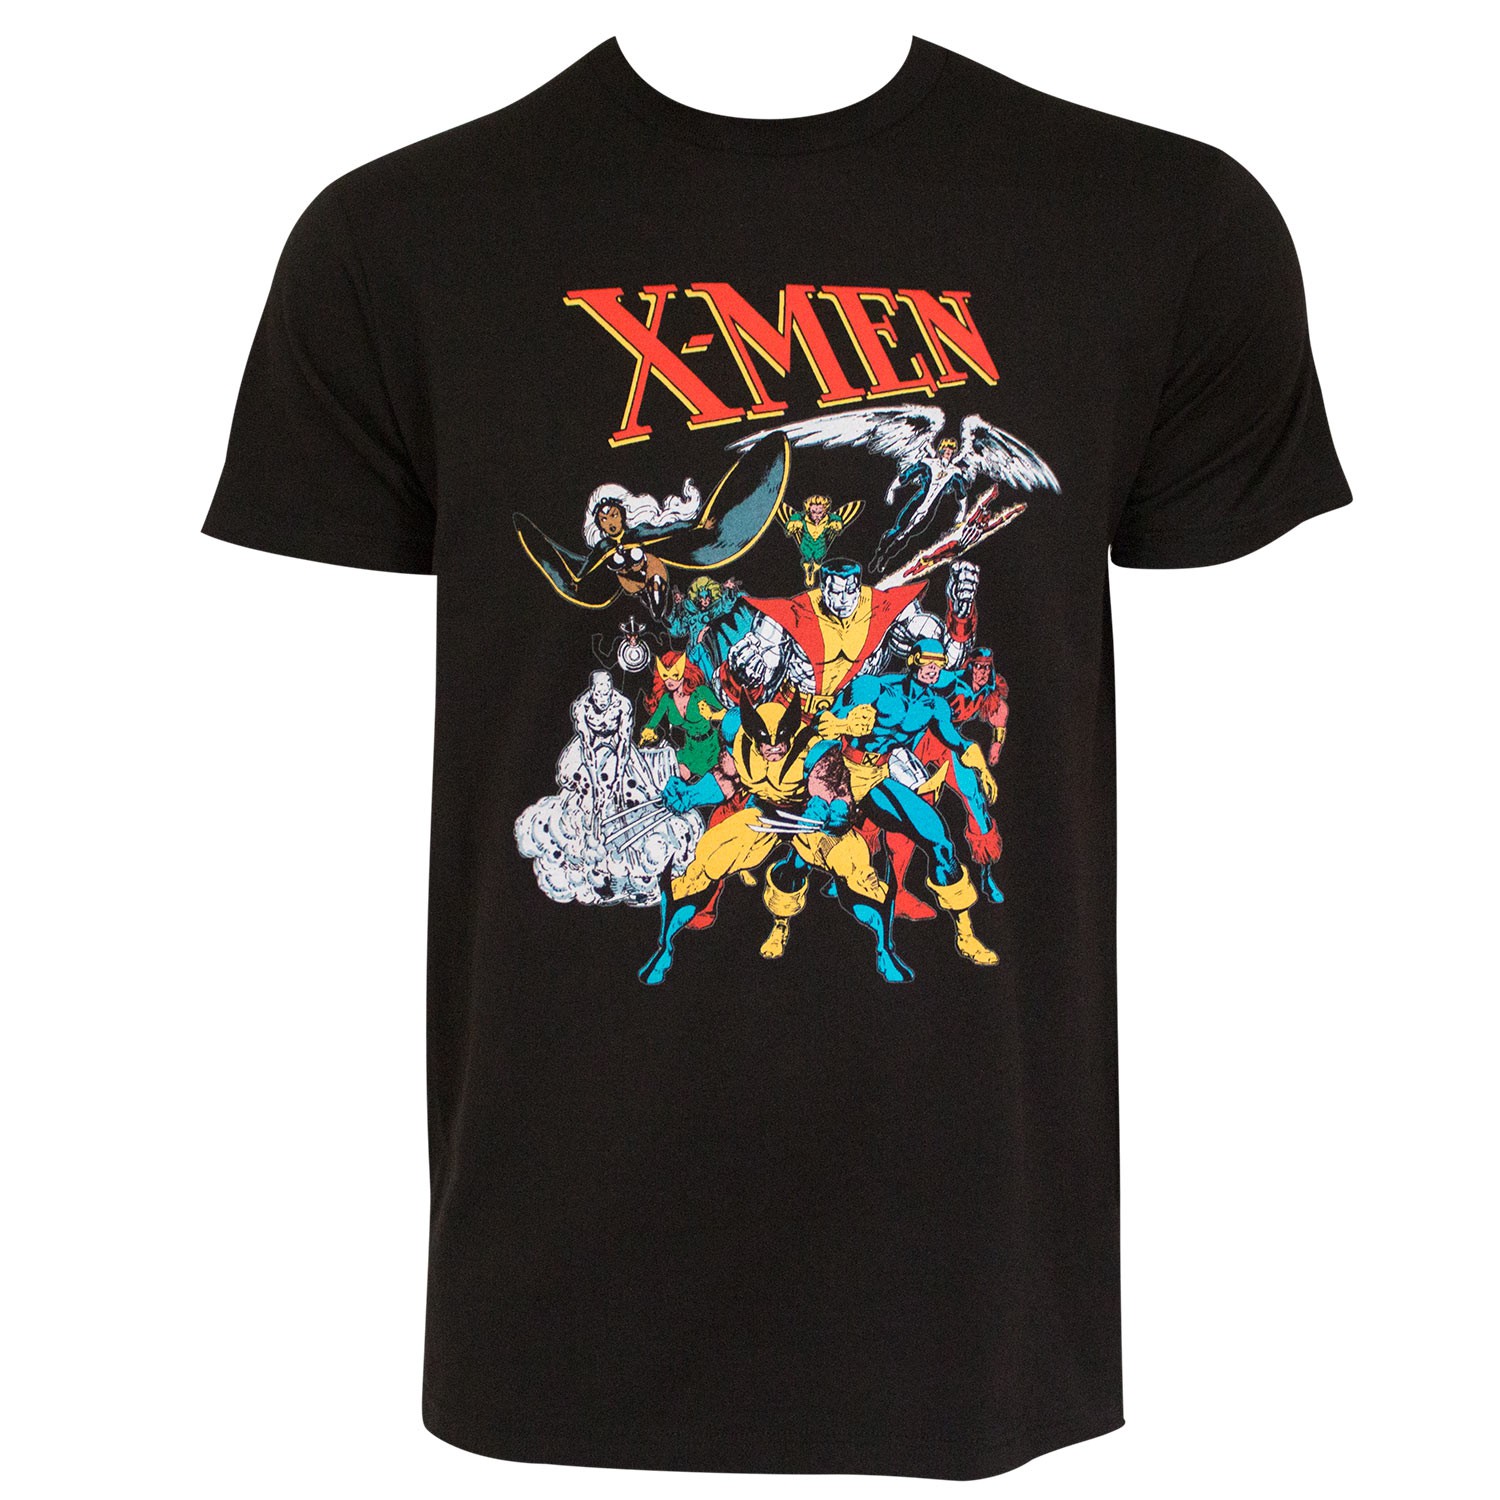 X-Men Vintage Characters Black Tee Shirt